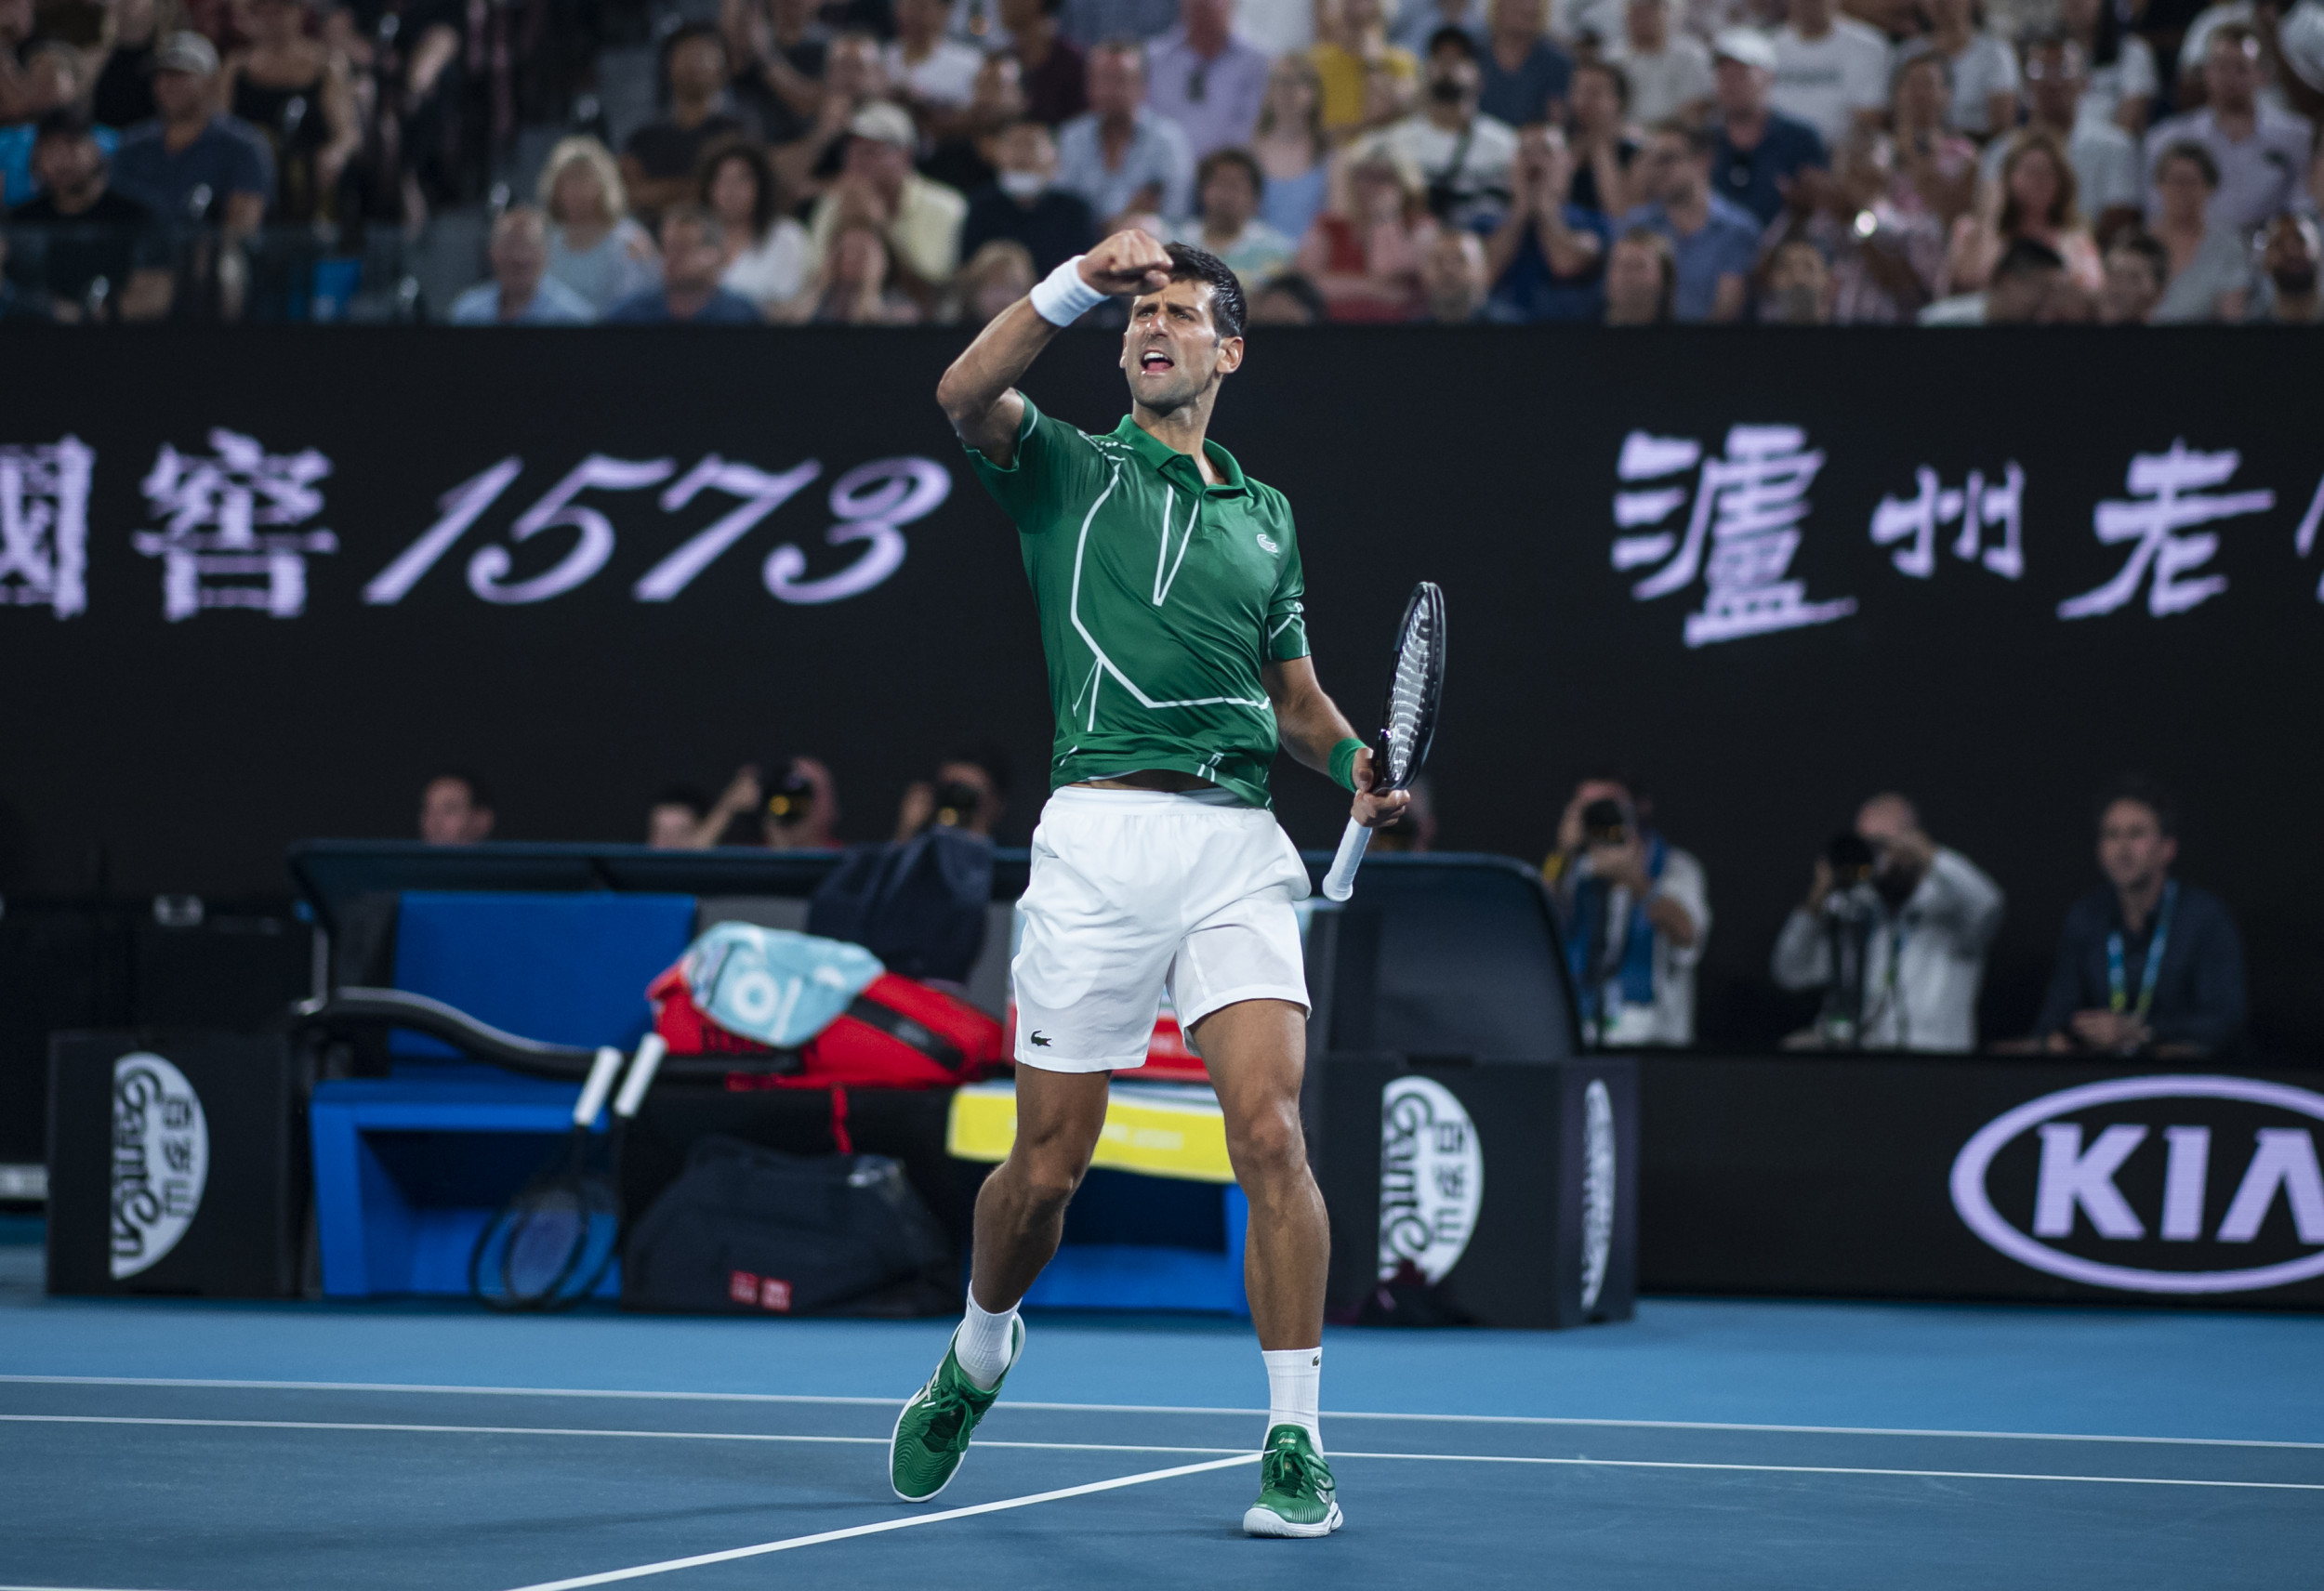 Australian Open 2020 Final How to Watch Novak Djokovic vs